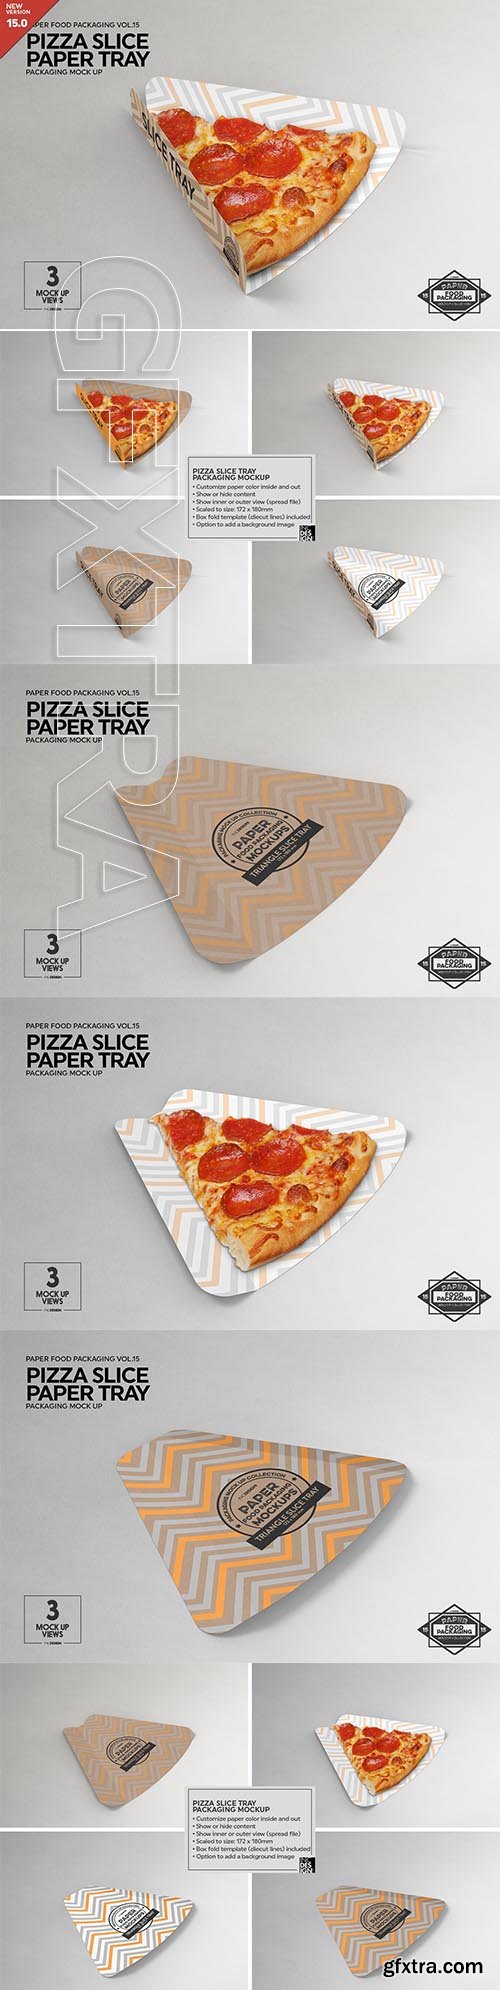 CreativeMarket - Pizza Slice Tray Packaging Mockup 3618493